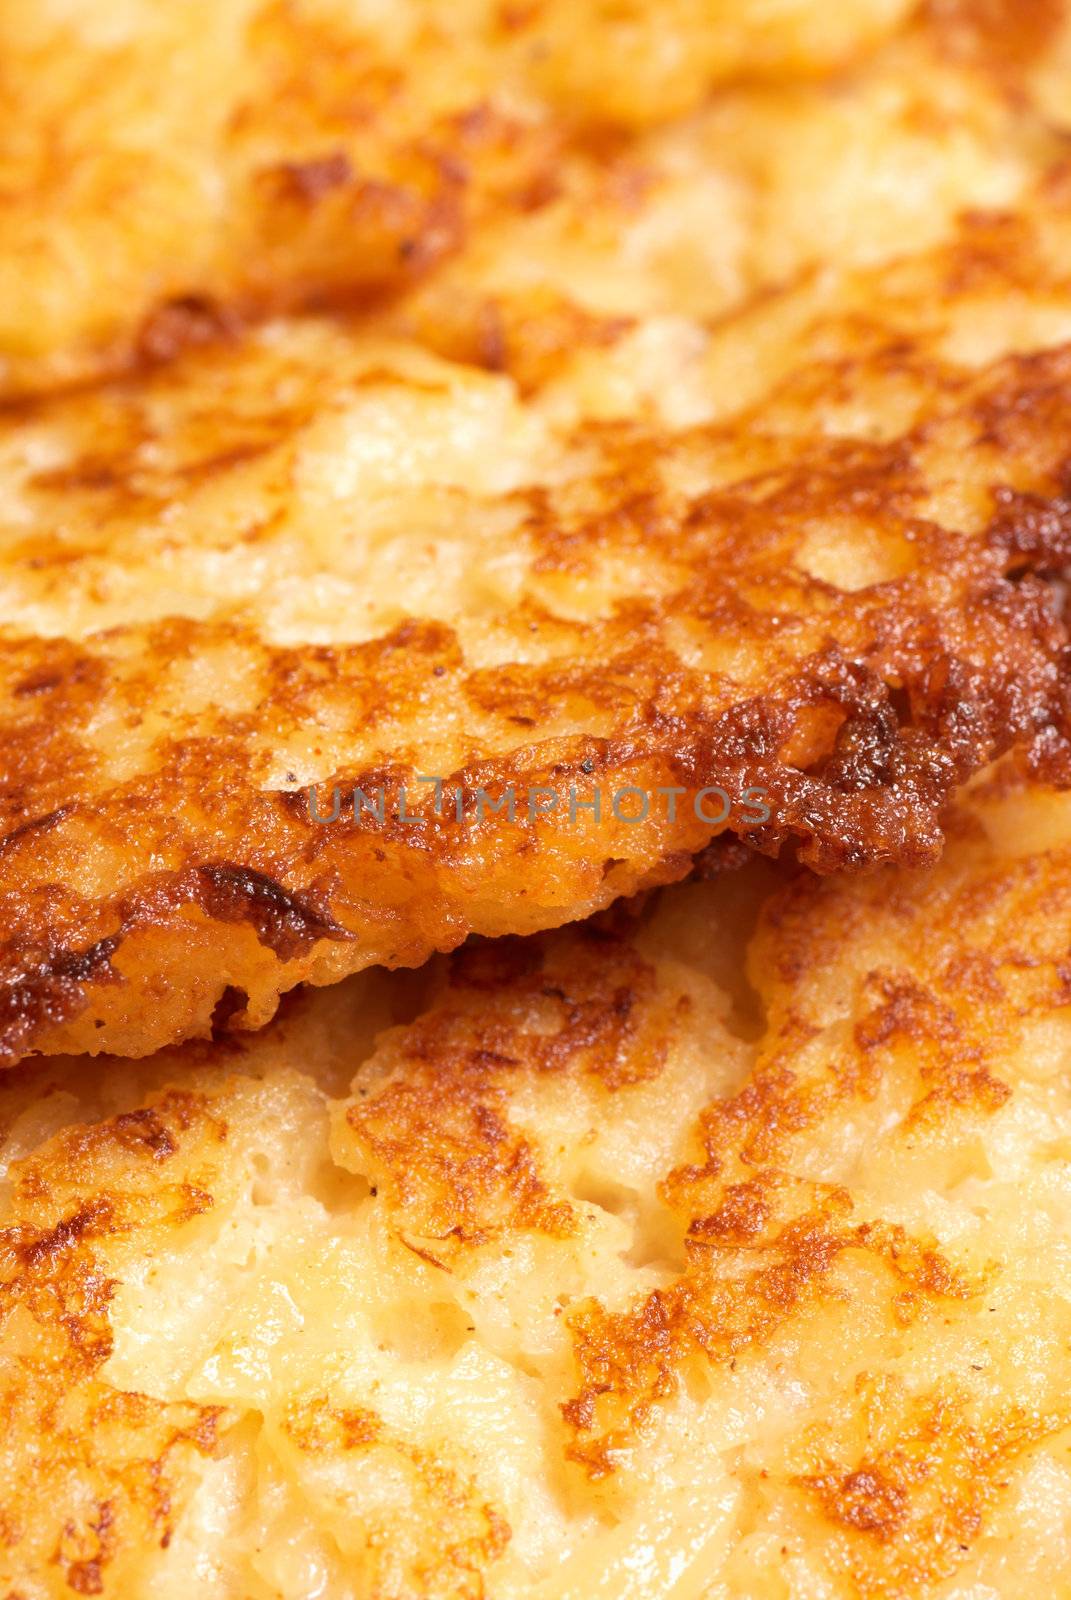 Closeup take of some freshly fried latkes